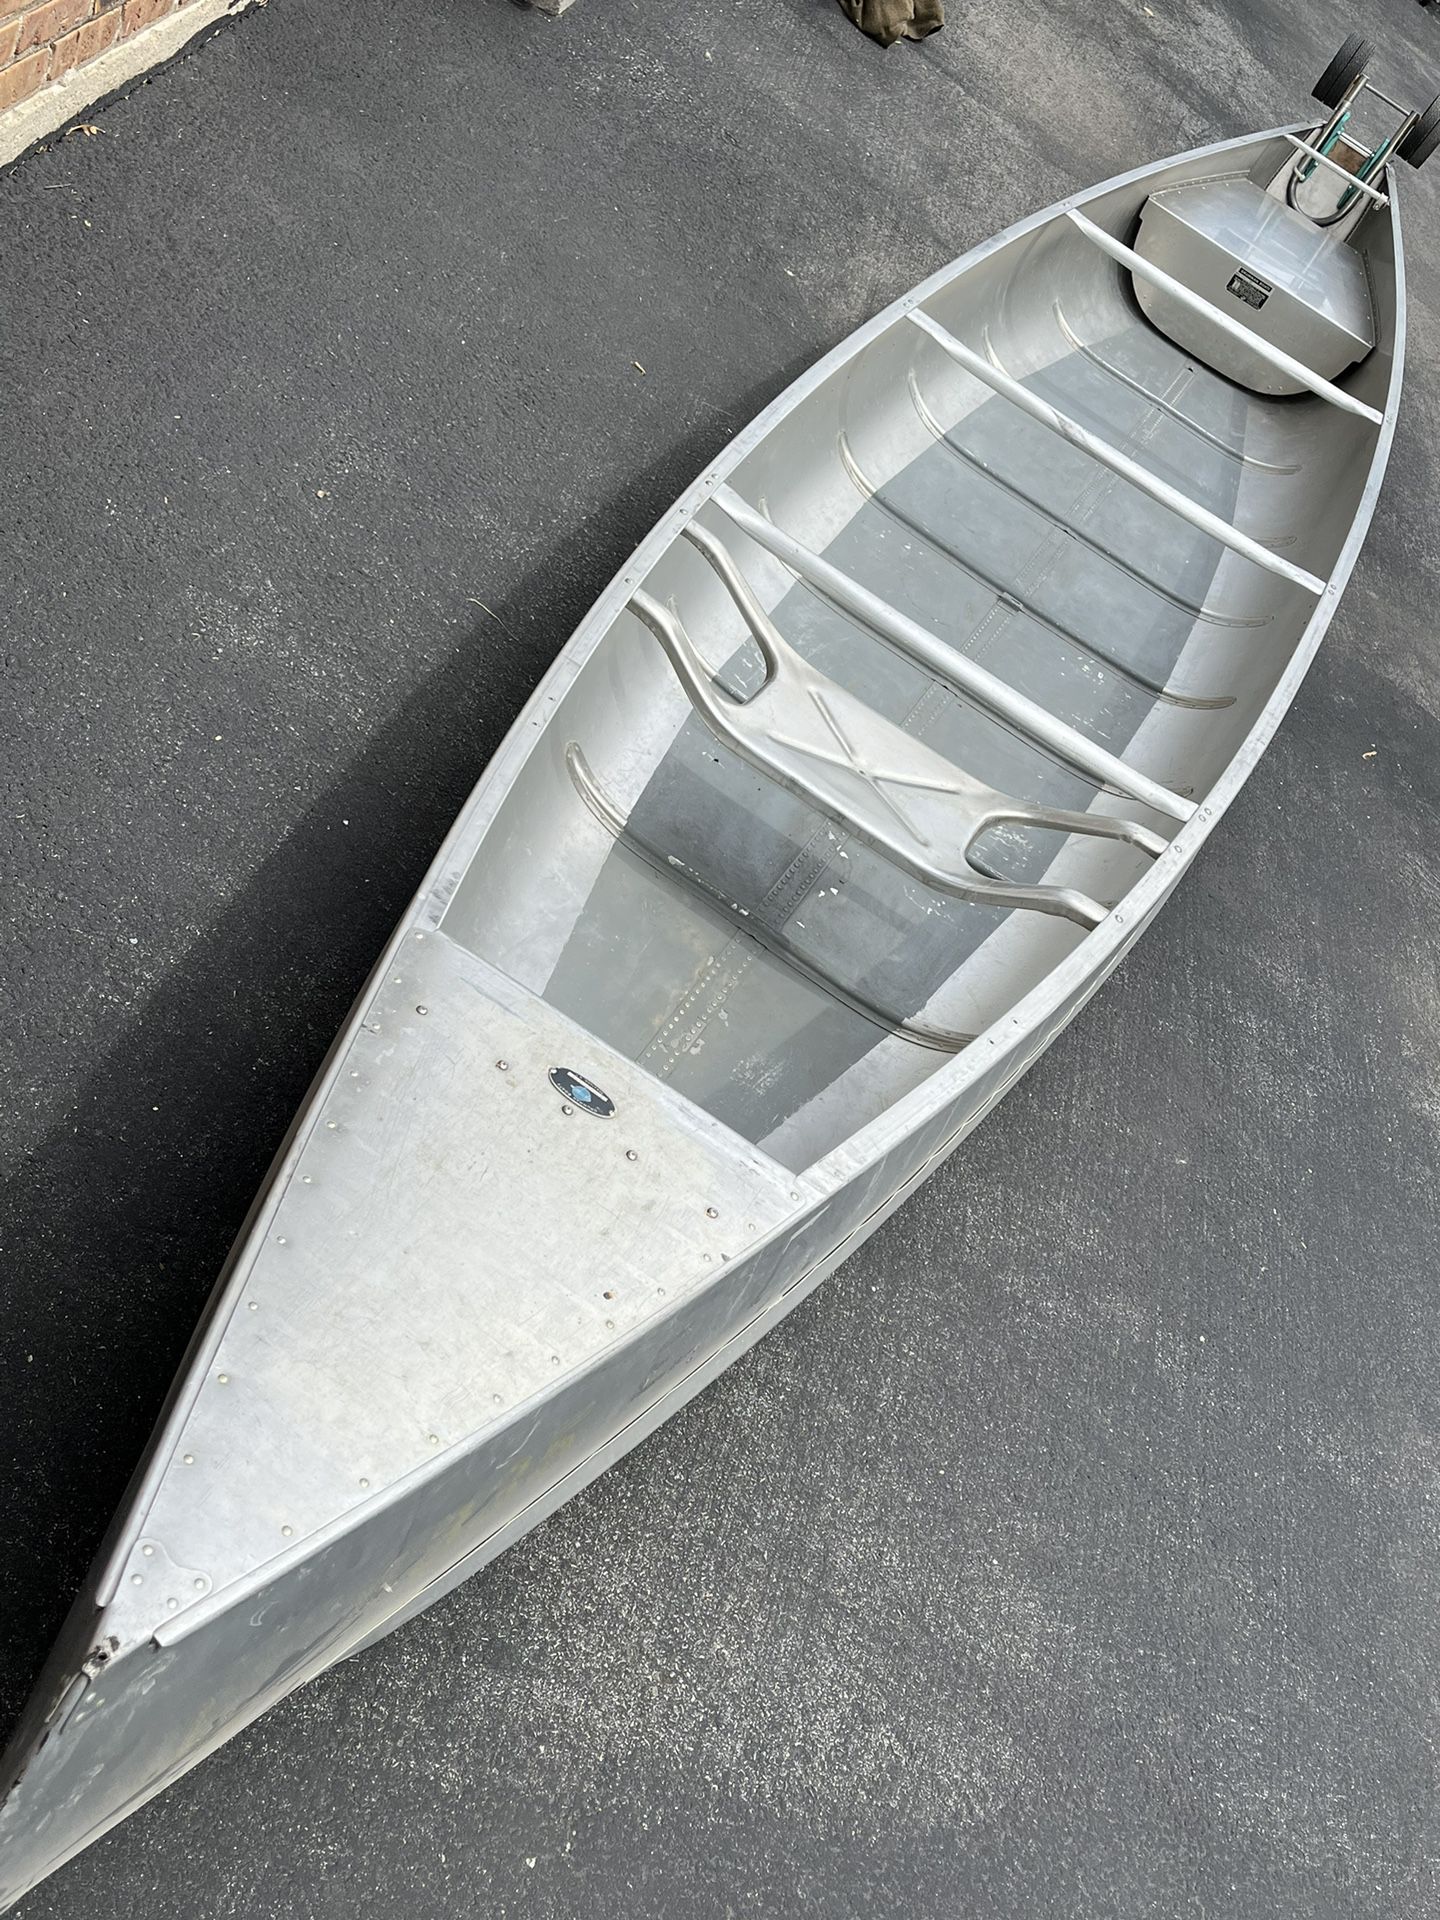 17’ Square Stern Aluminum Grumman Canoe w/ sailboat adaptation equipnent